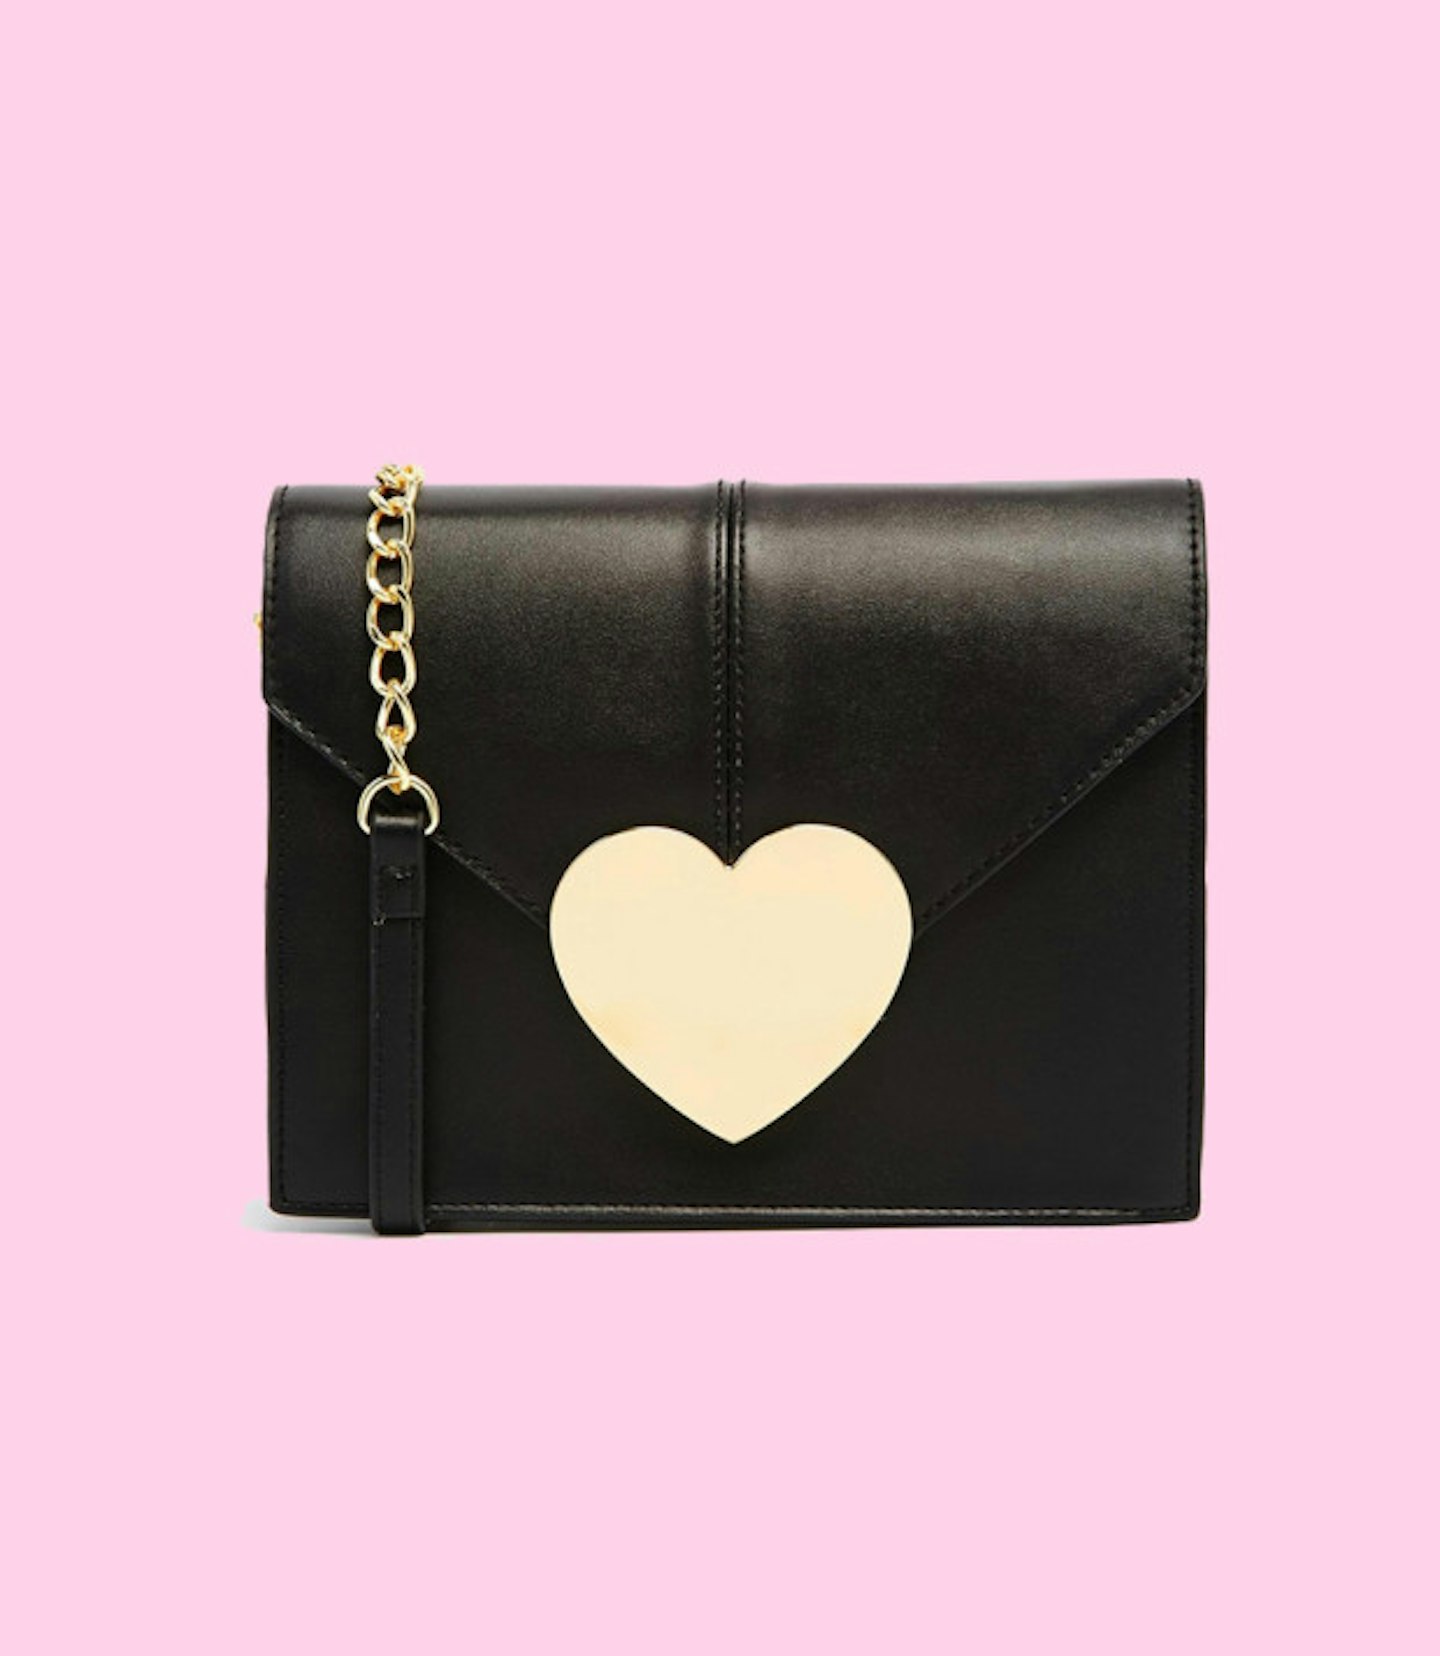 Black bag with metallic heart clasp